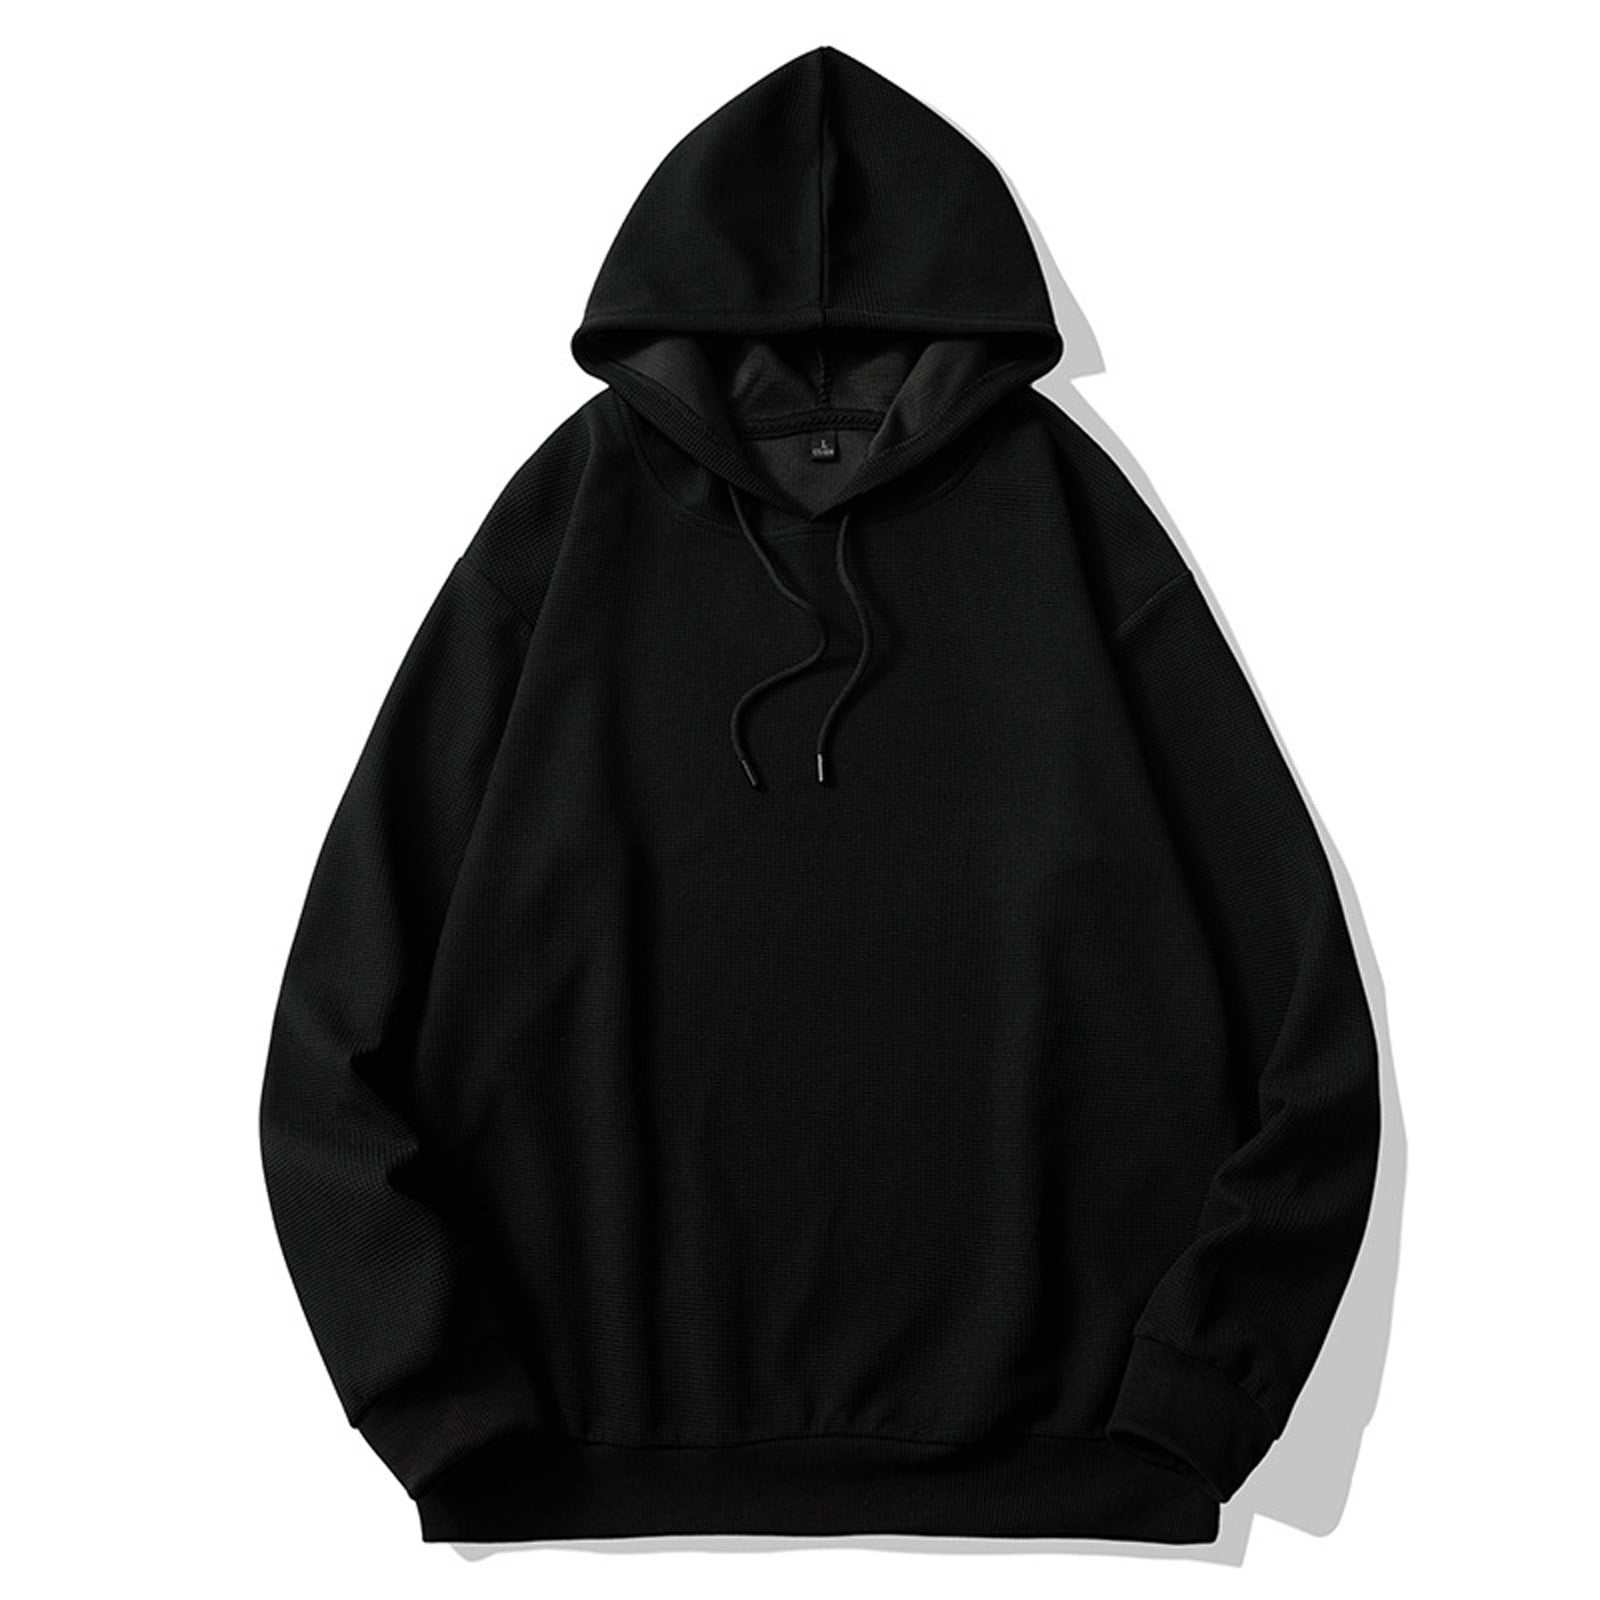 LEEy-world Graphic Hoodies Men'S Pullover Hoodies, Thermal Warm